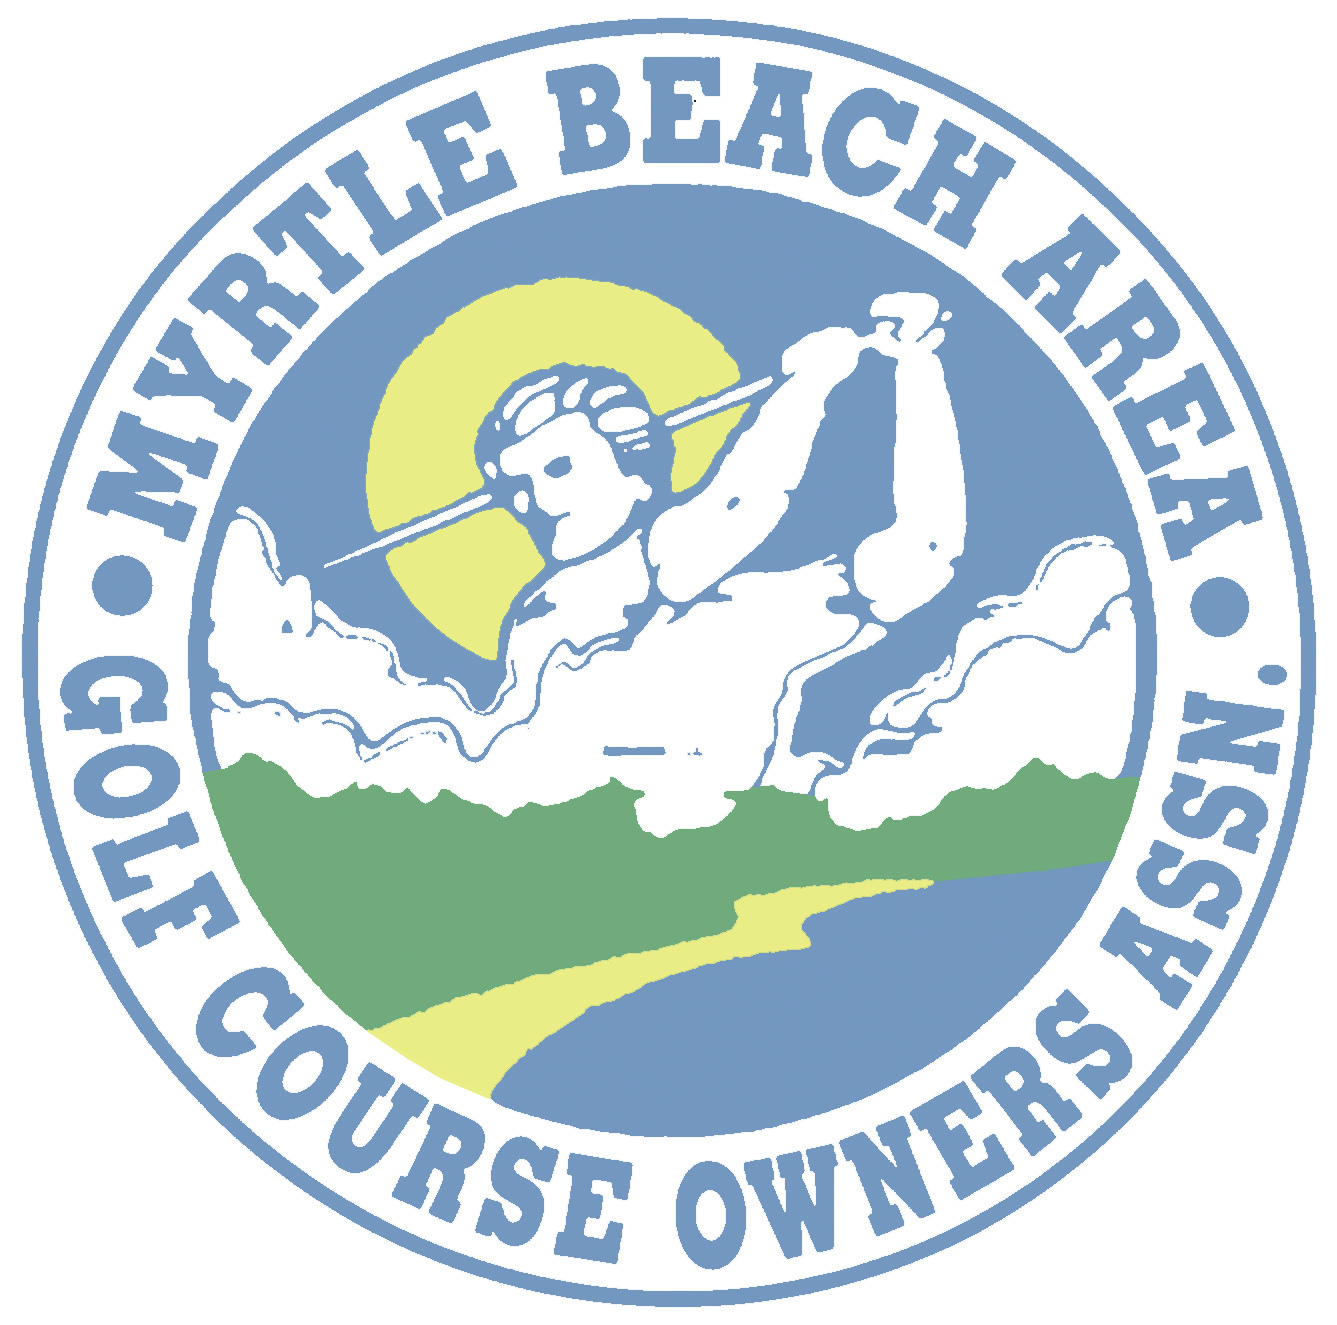 myrtle beach area golf course owners association logo